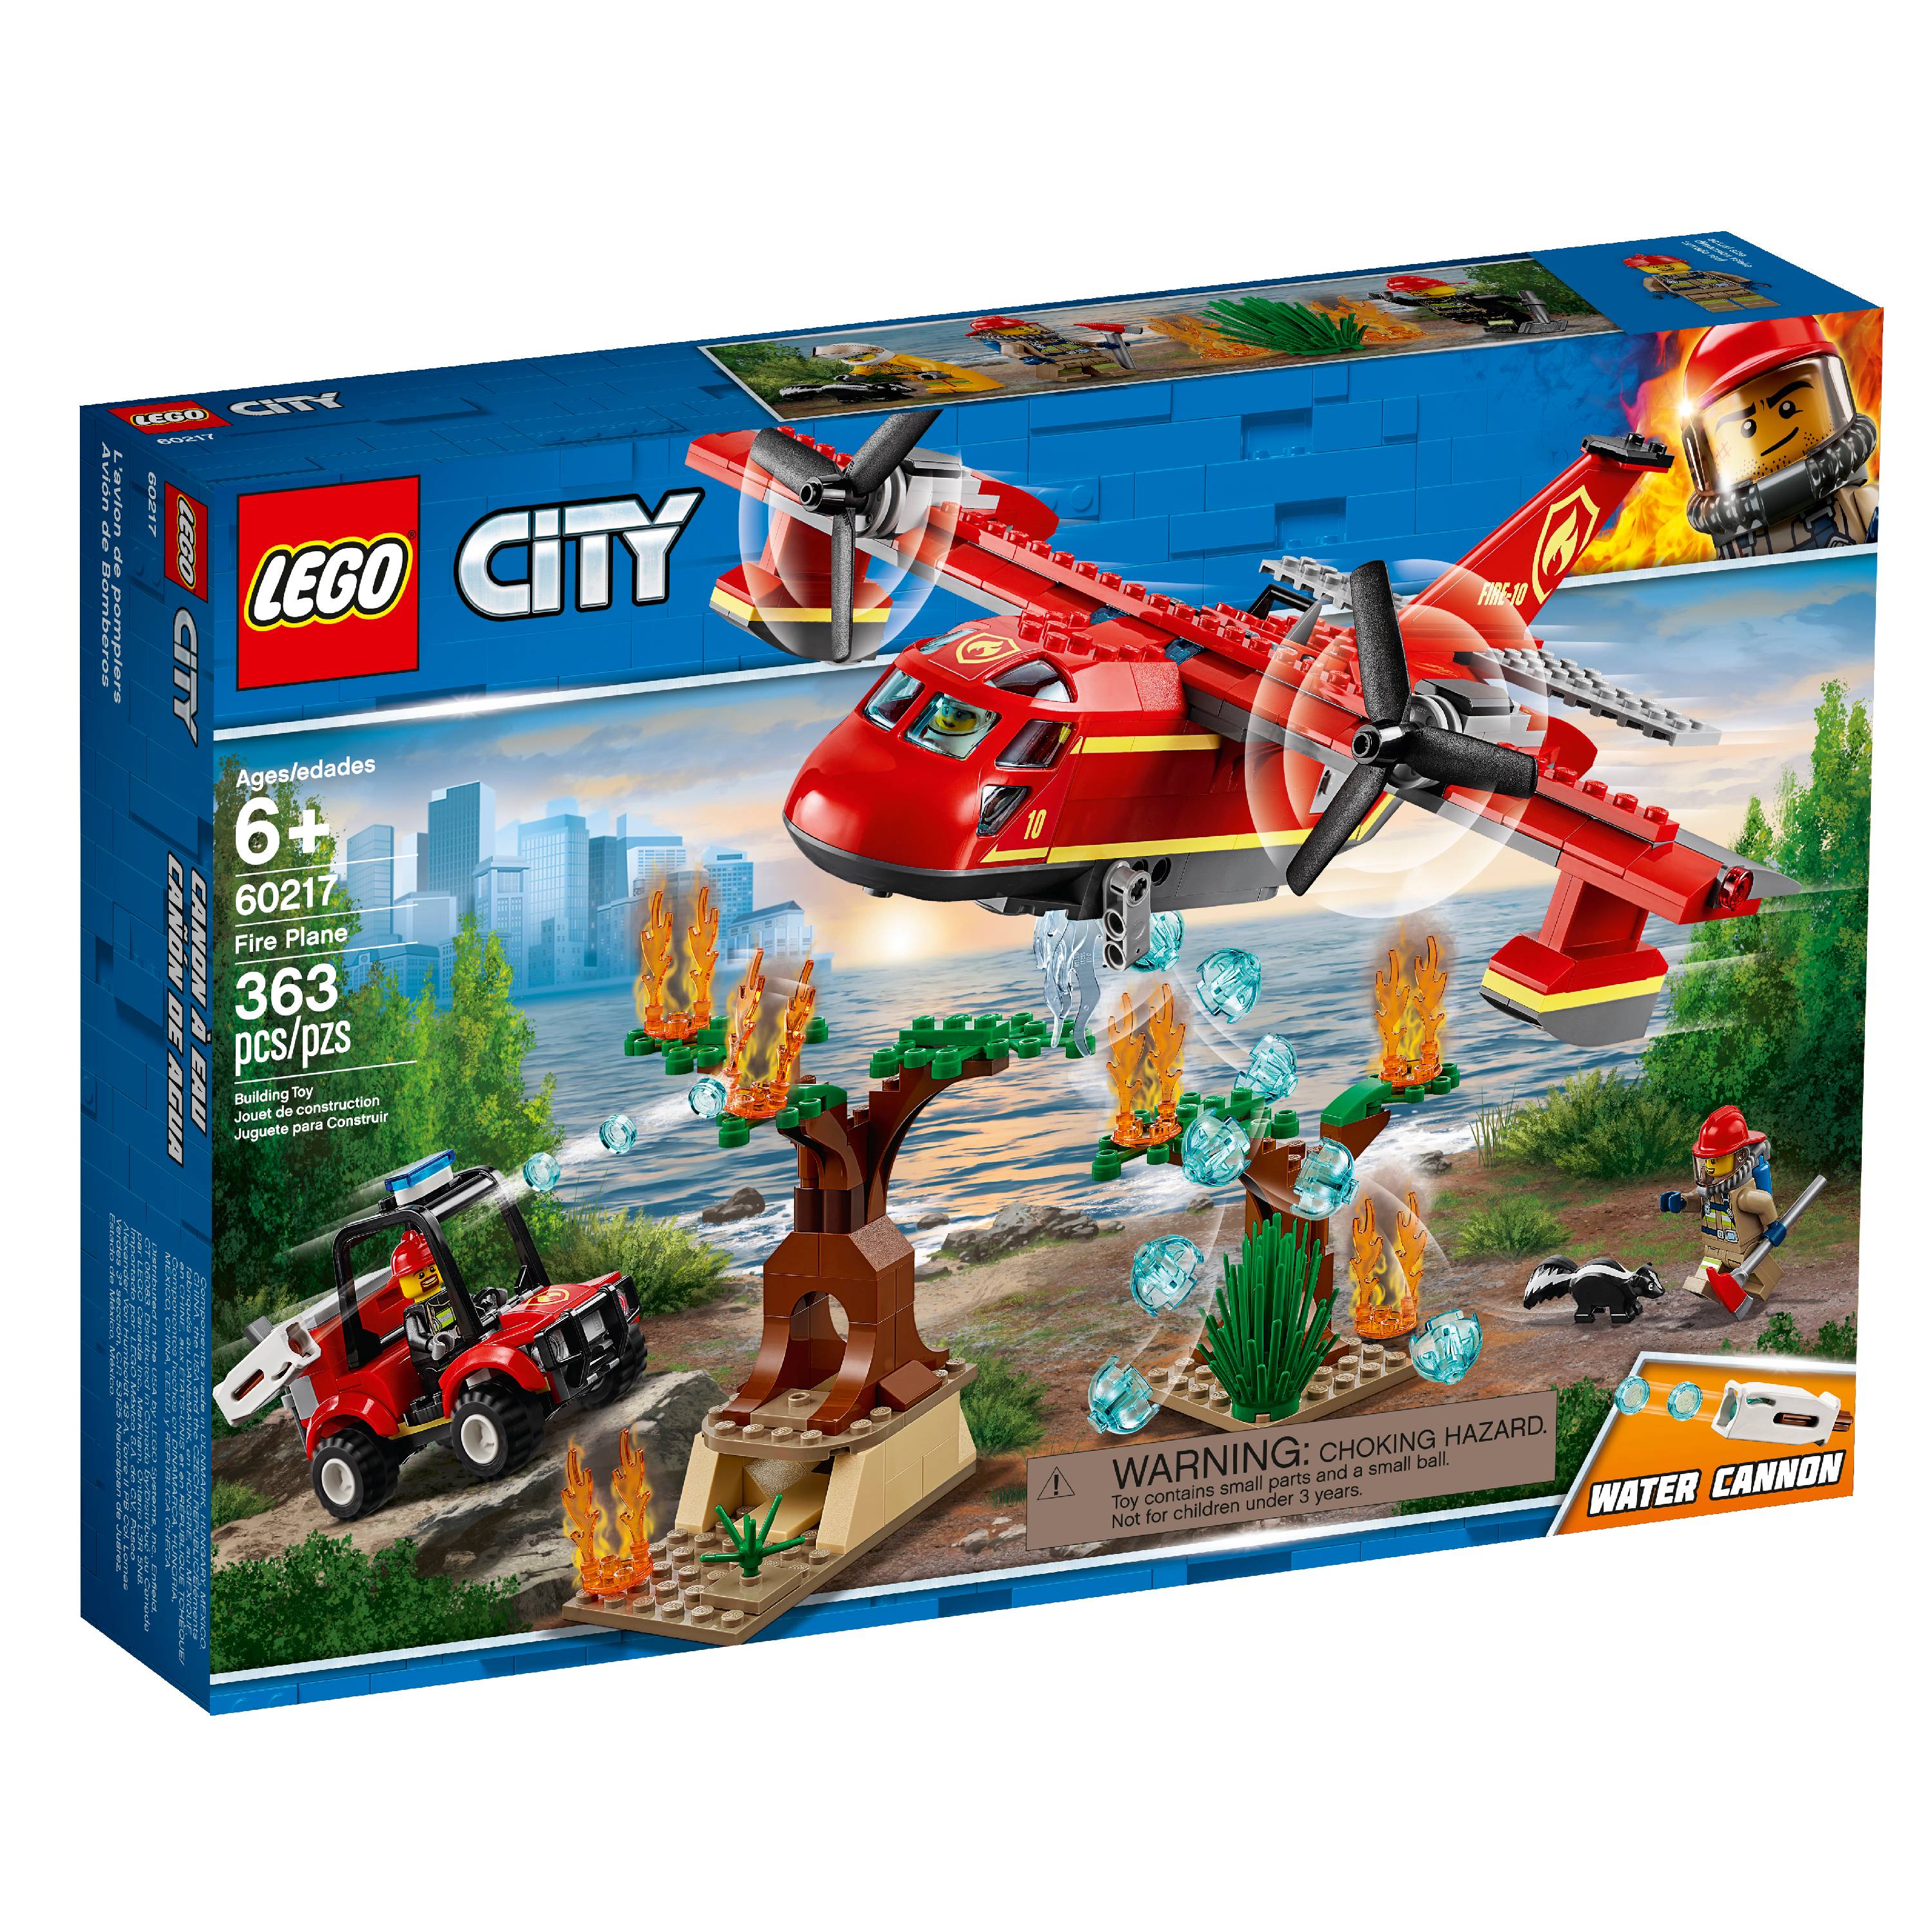 LEGO City Fire Plane 60217 Rescue Plane Building Set - image 5 of 8